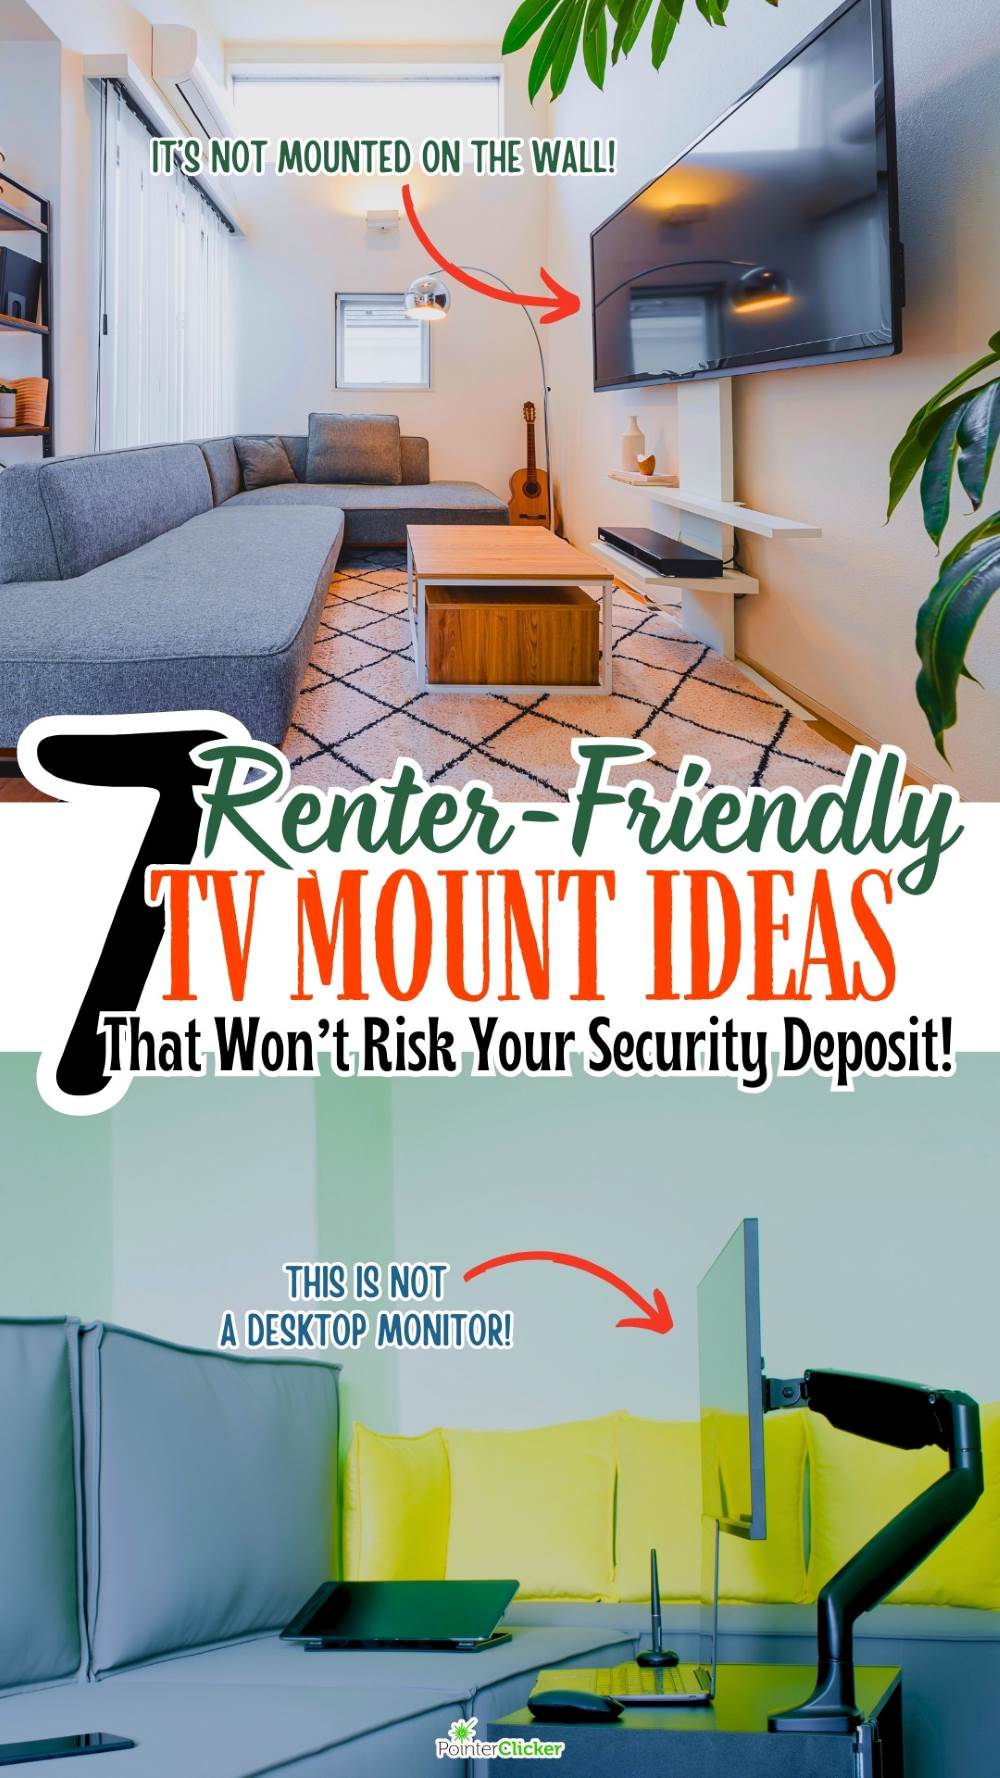 7 renter-friendly tv mount ideas that won't risk your security deposit